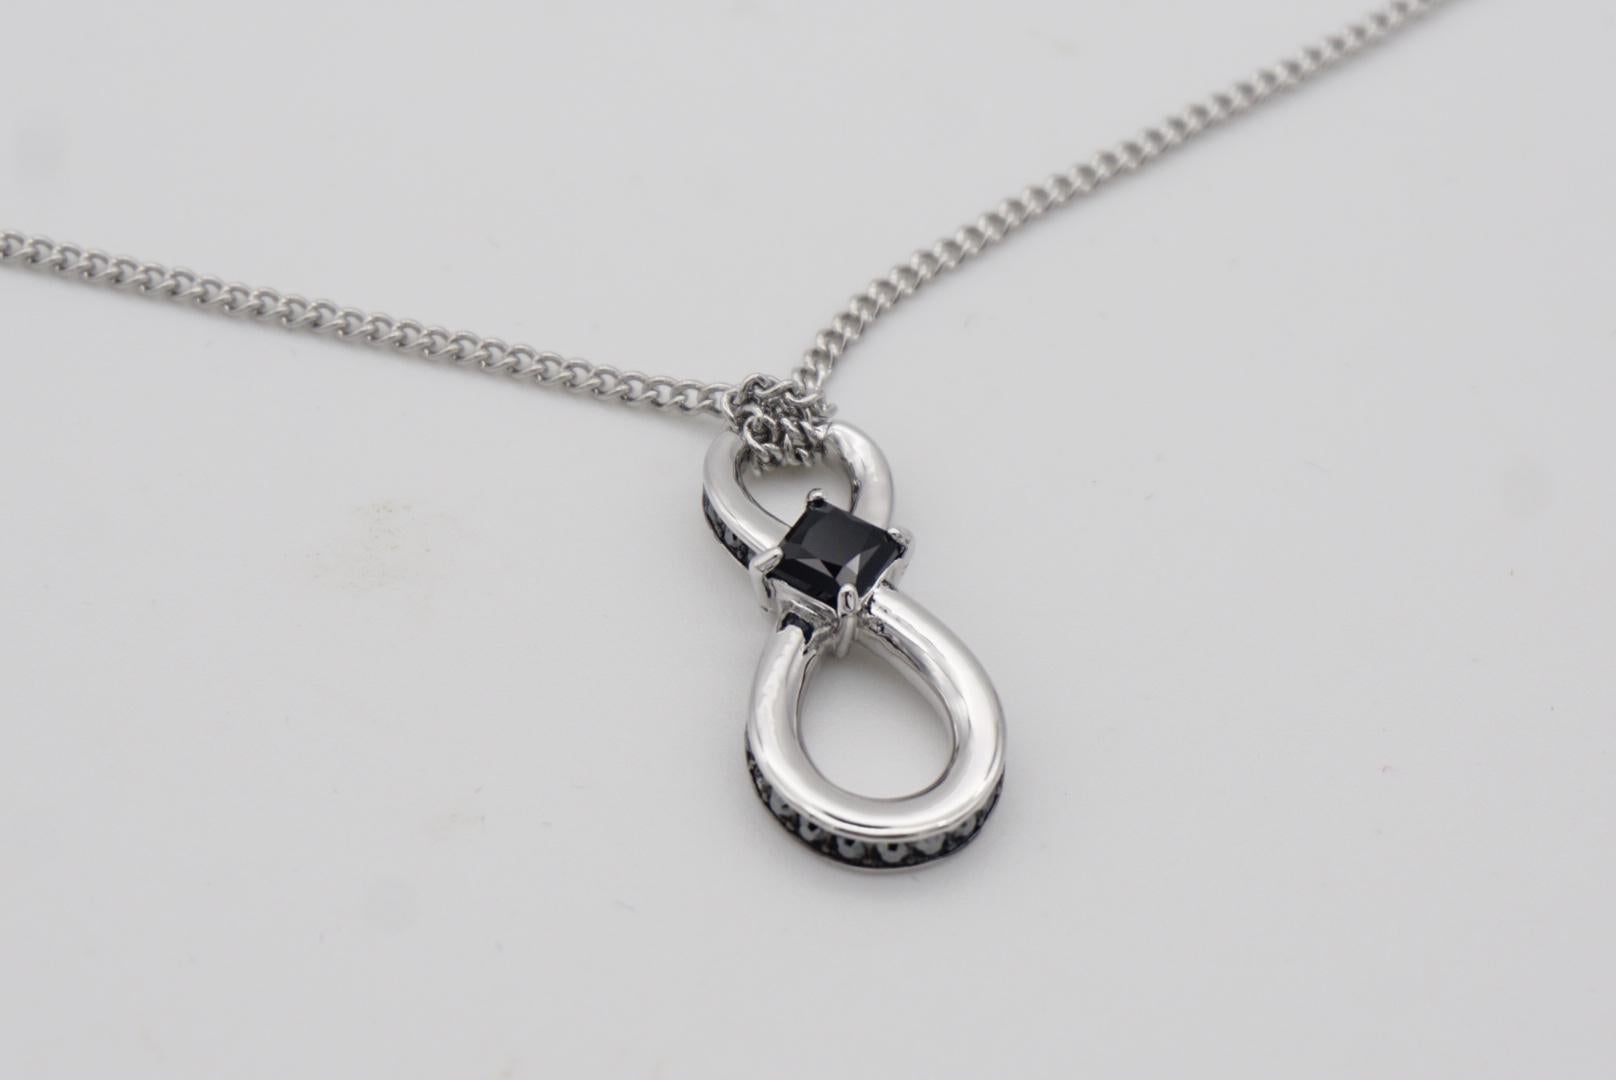 Swarovski Unisex Infinity Black Crystal White Silver Pendant Long Necklace. BNWT 8